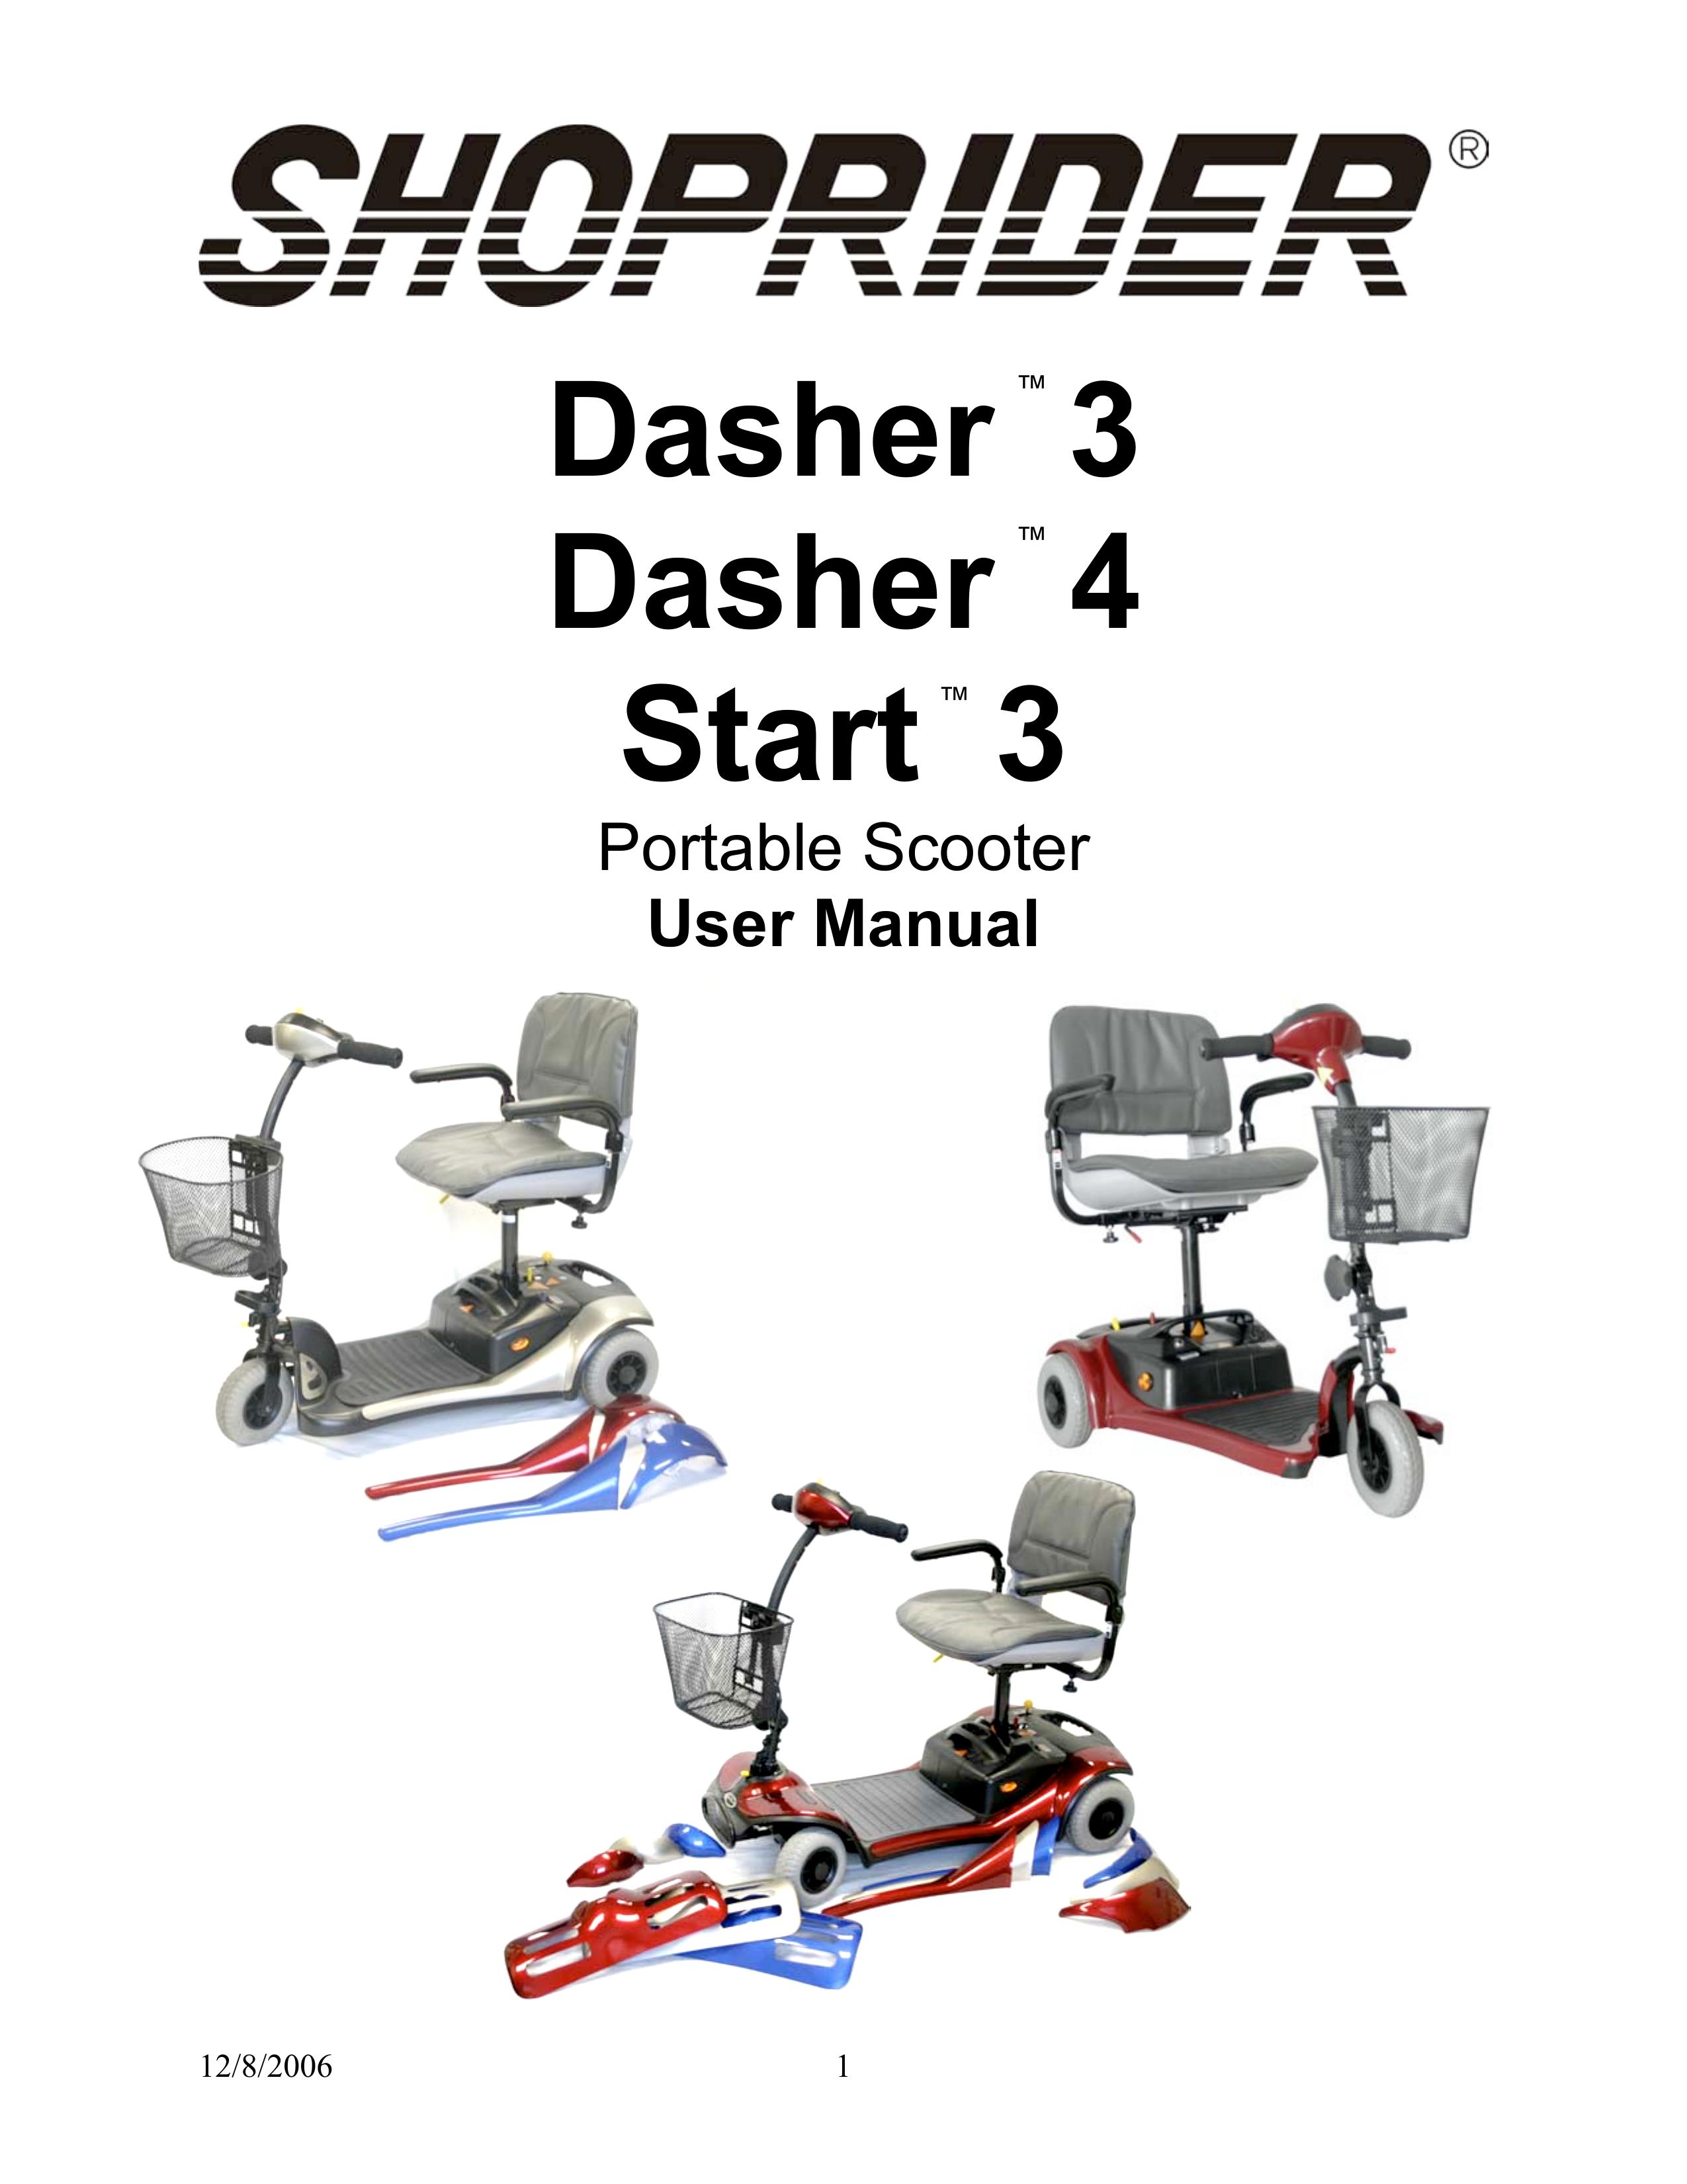 Shoprider Dasher 4 Mobility Aid User Manual